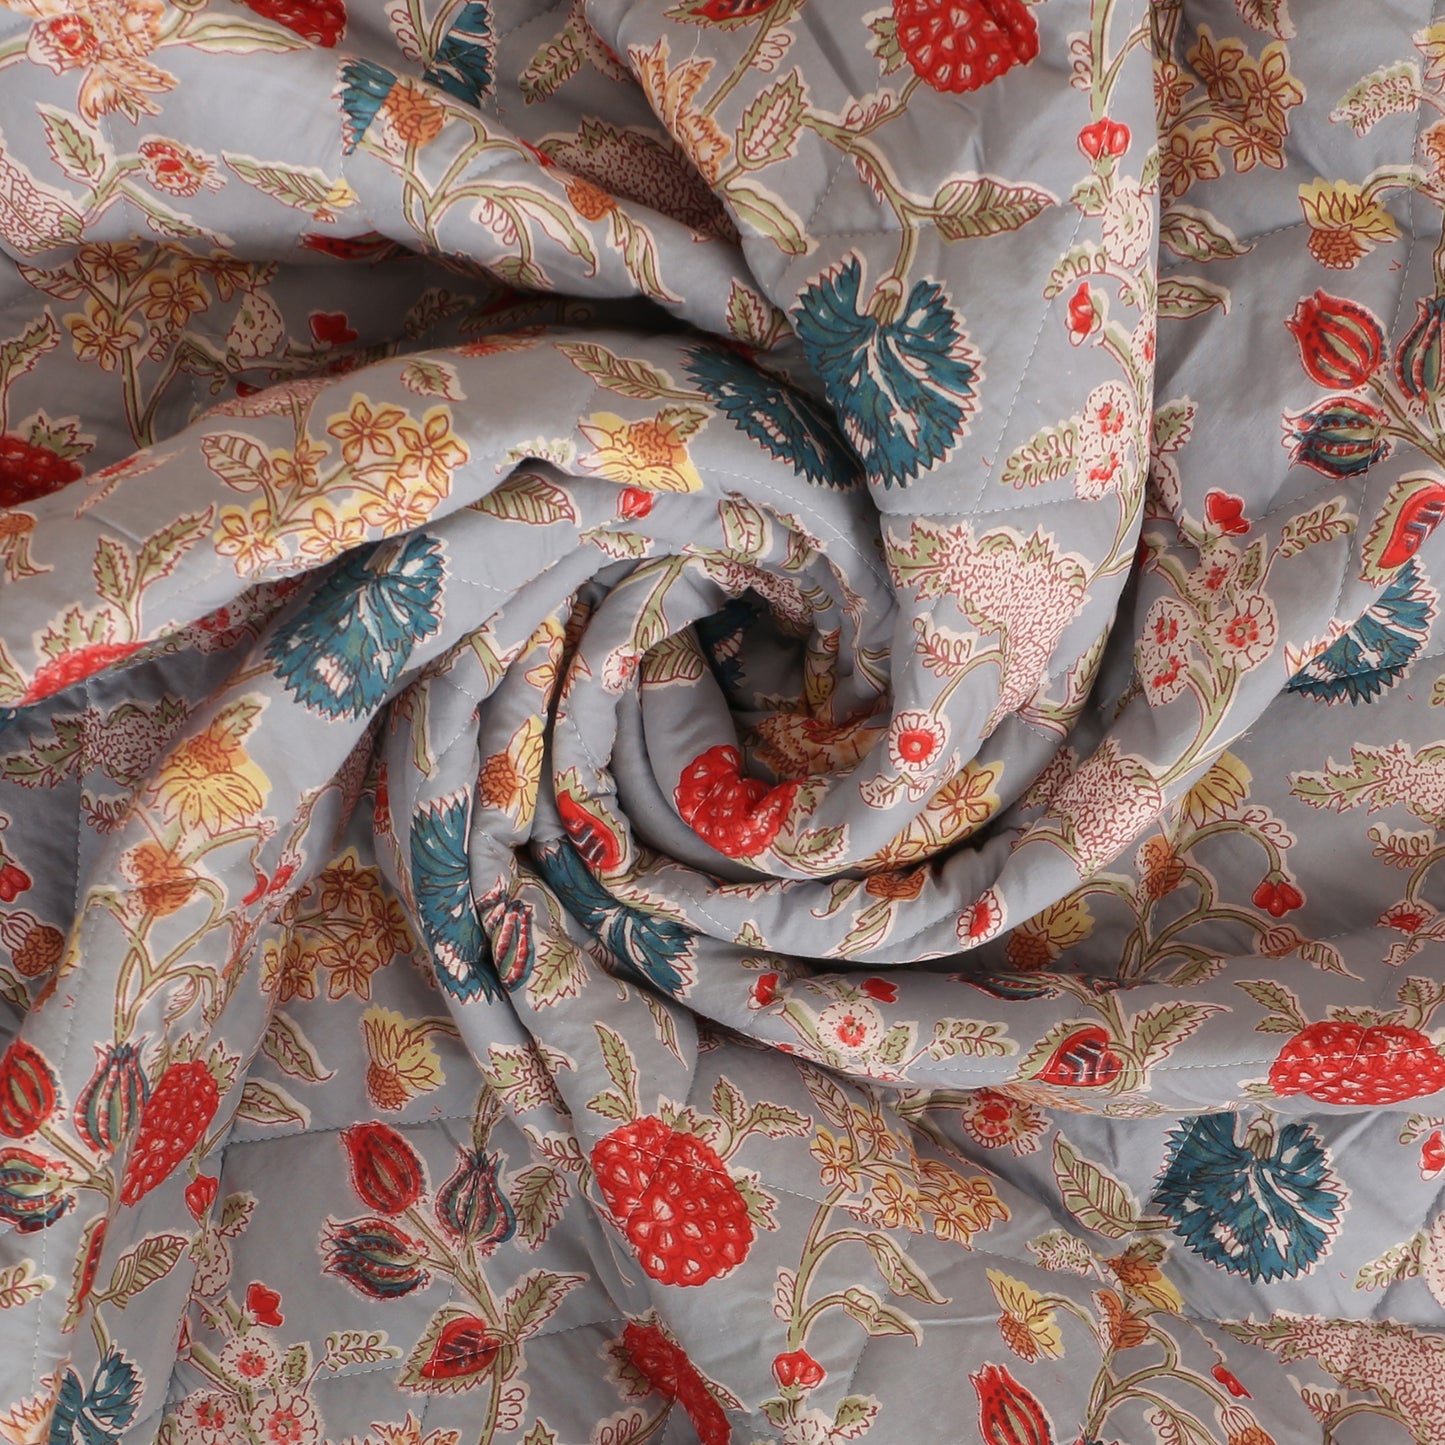 Tropical Print Super Soft Reversible Quilt/Comforter